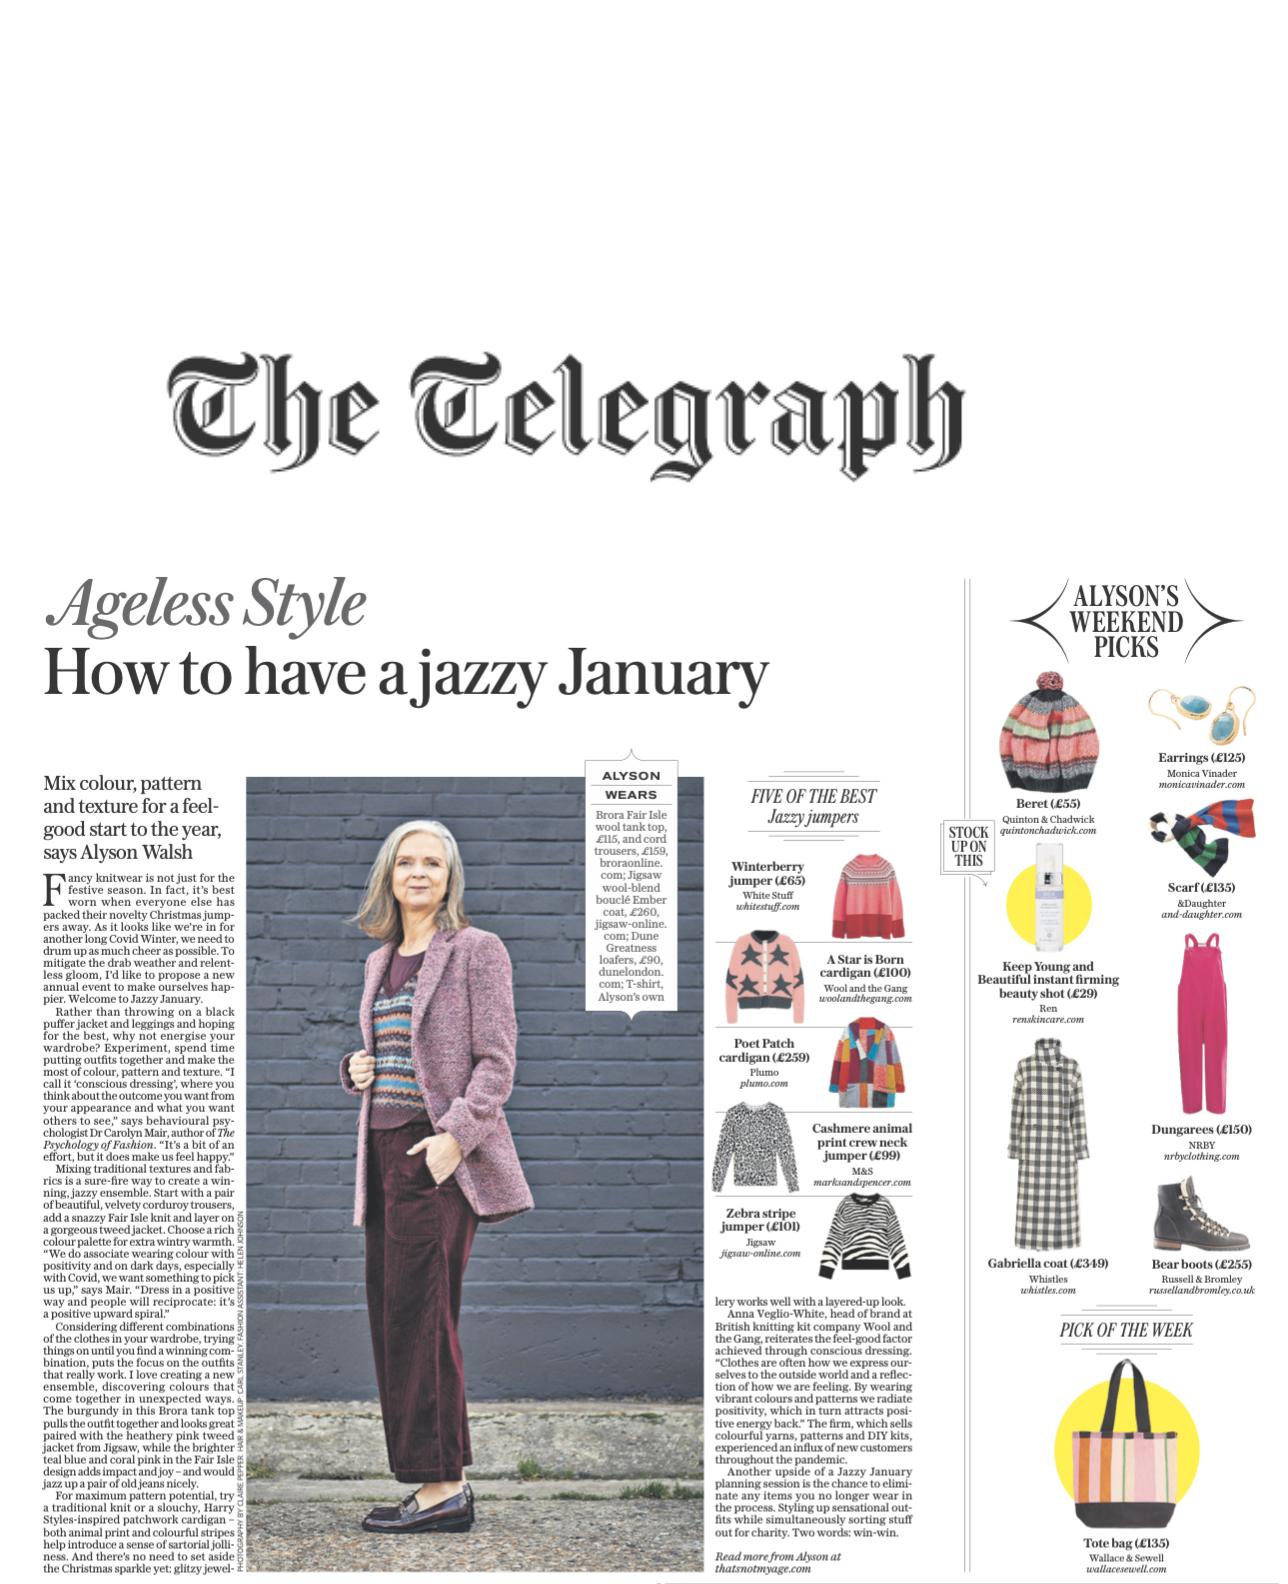 Jan 22 -Telegraph QC Beret is pick of the week